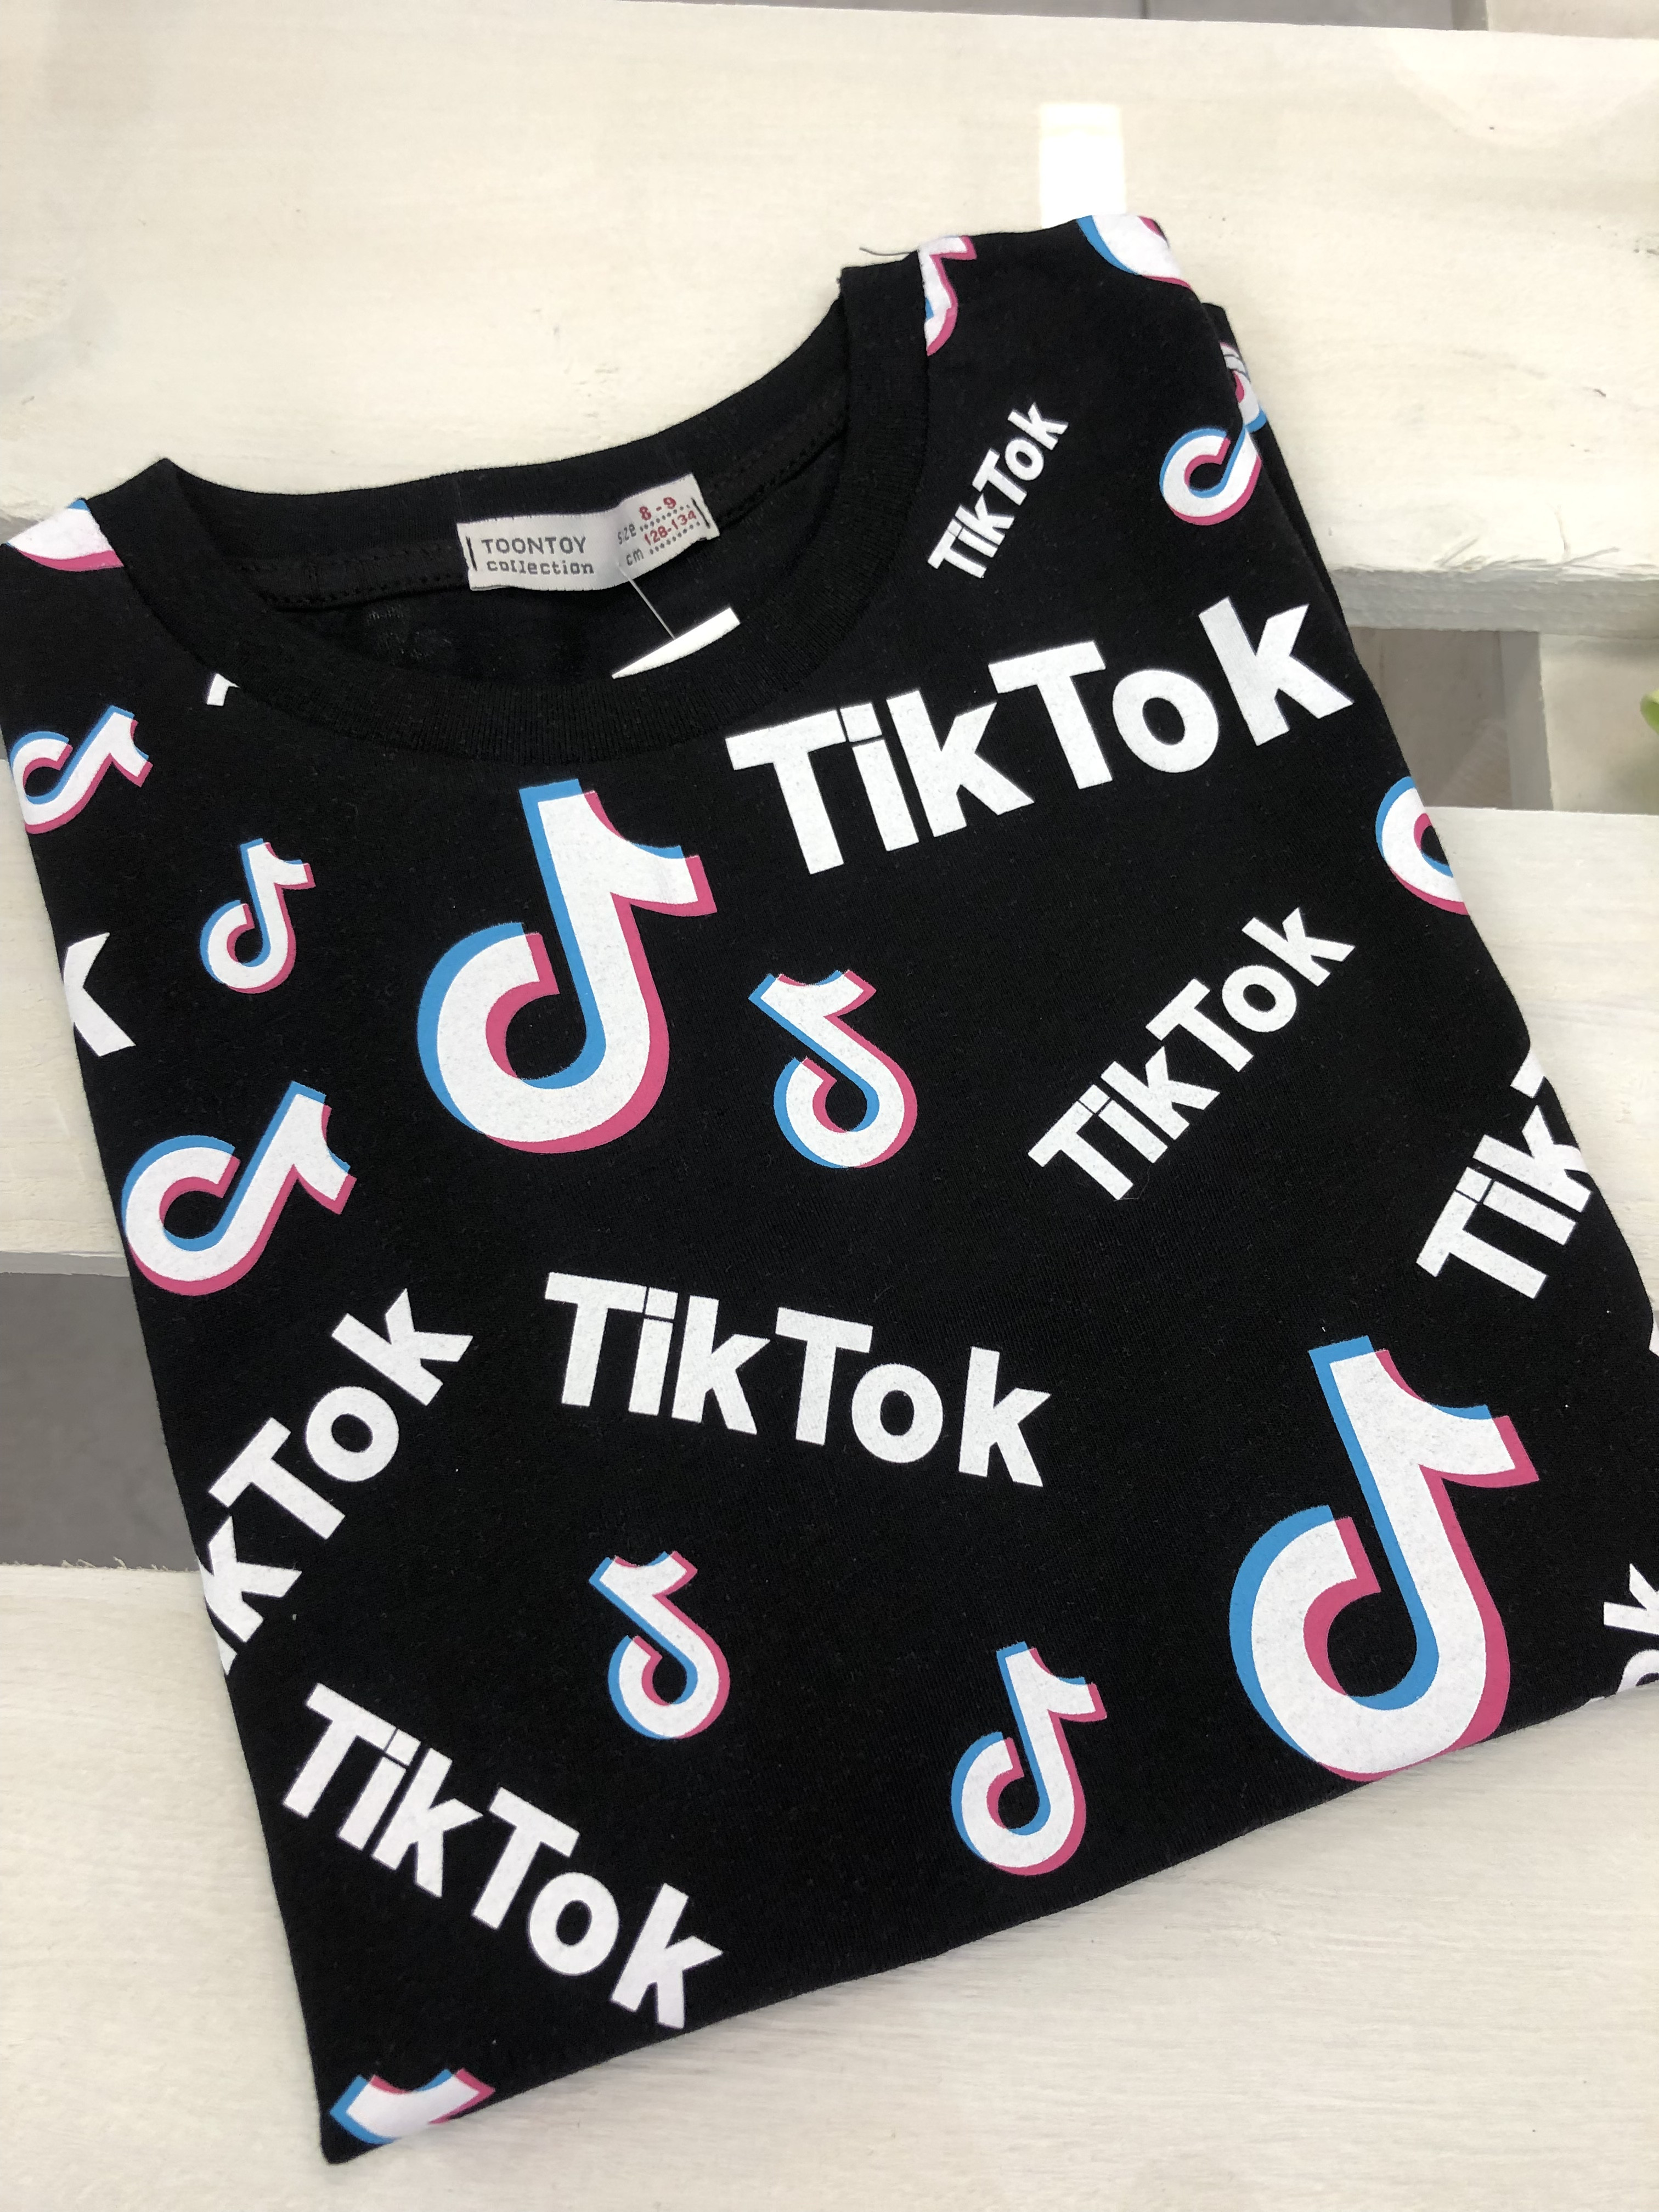 Oblečenie Tik Tok Tričká a Mikiny | TifanTEX
 |Tiktok Obleceni Detske